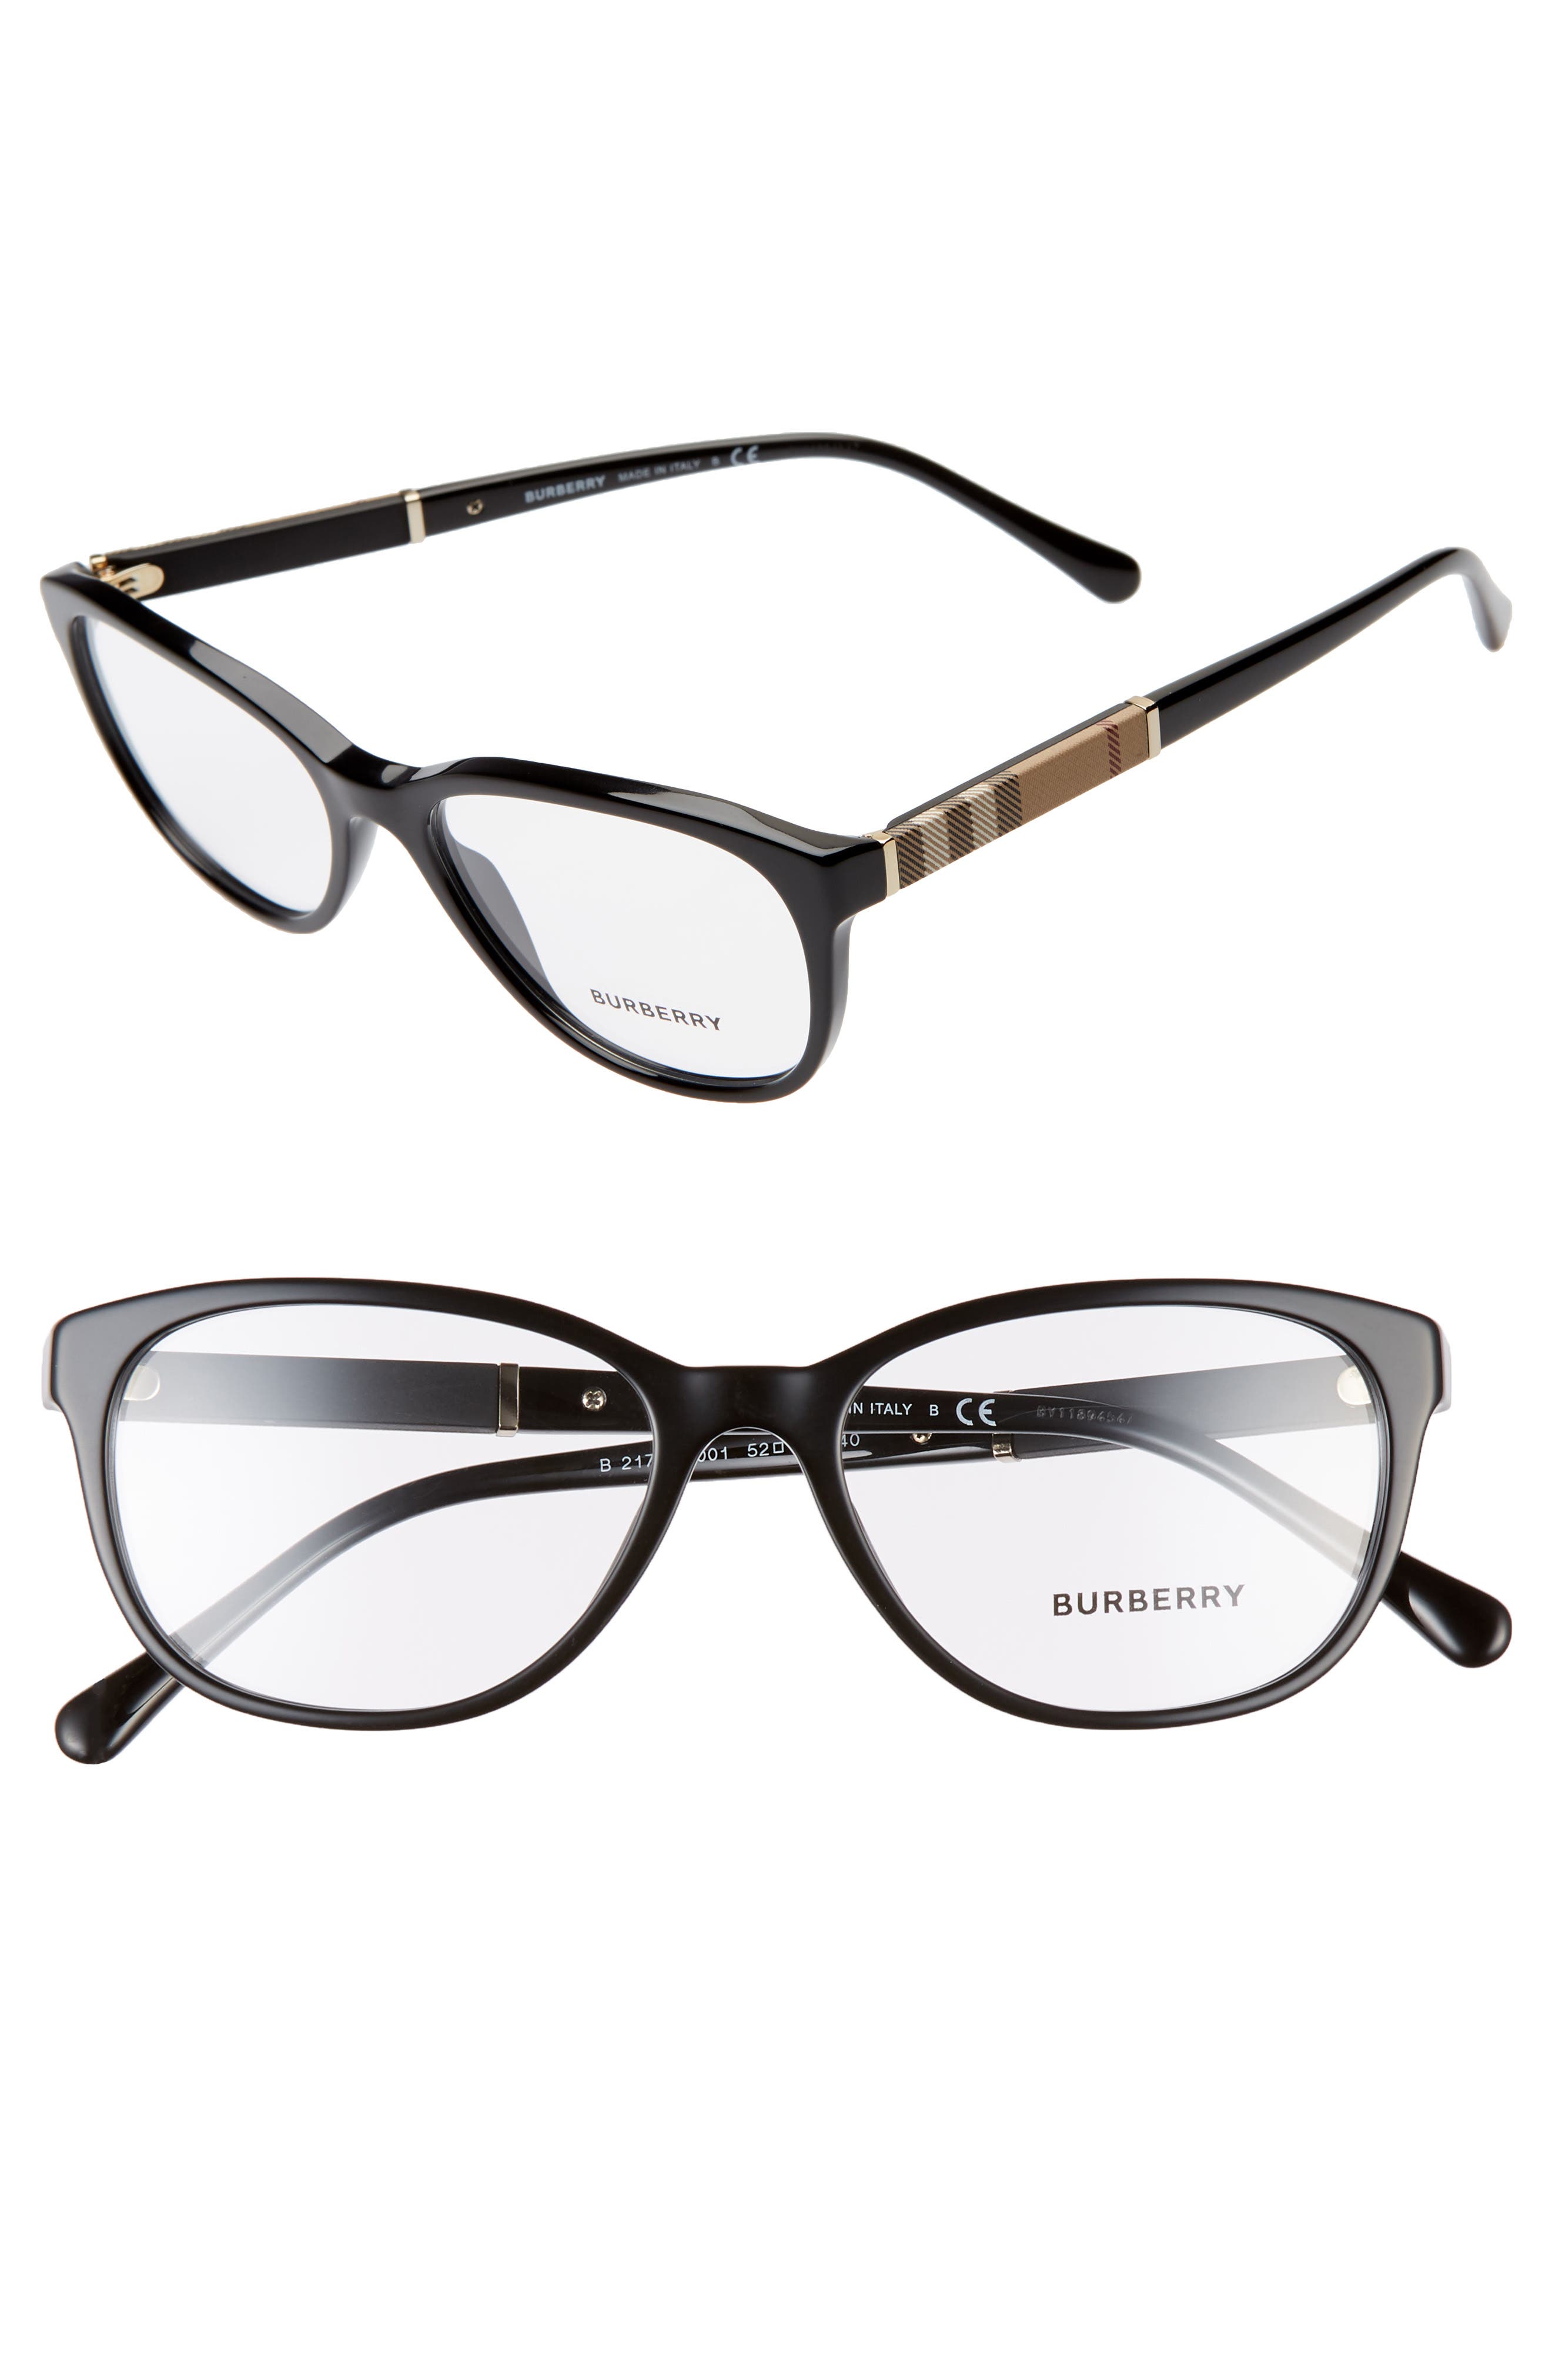 burberry optical eyewear